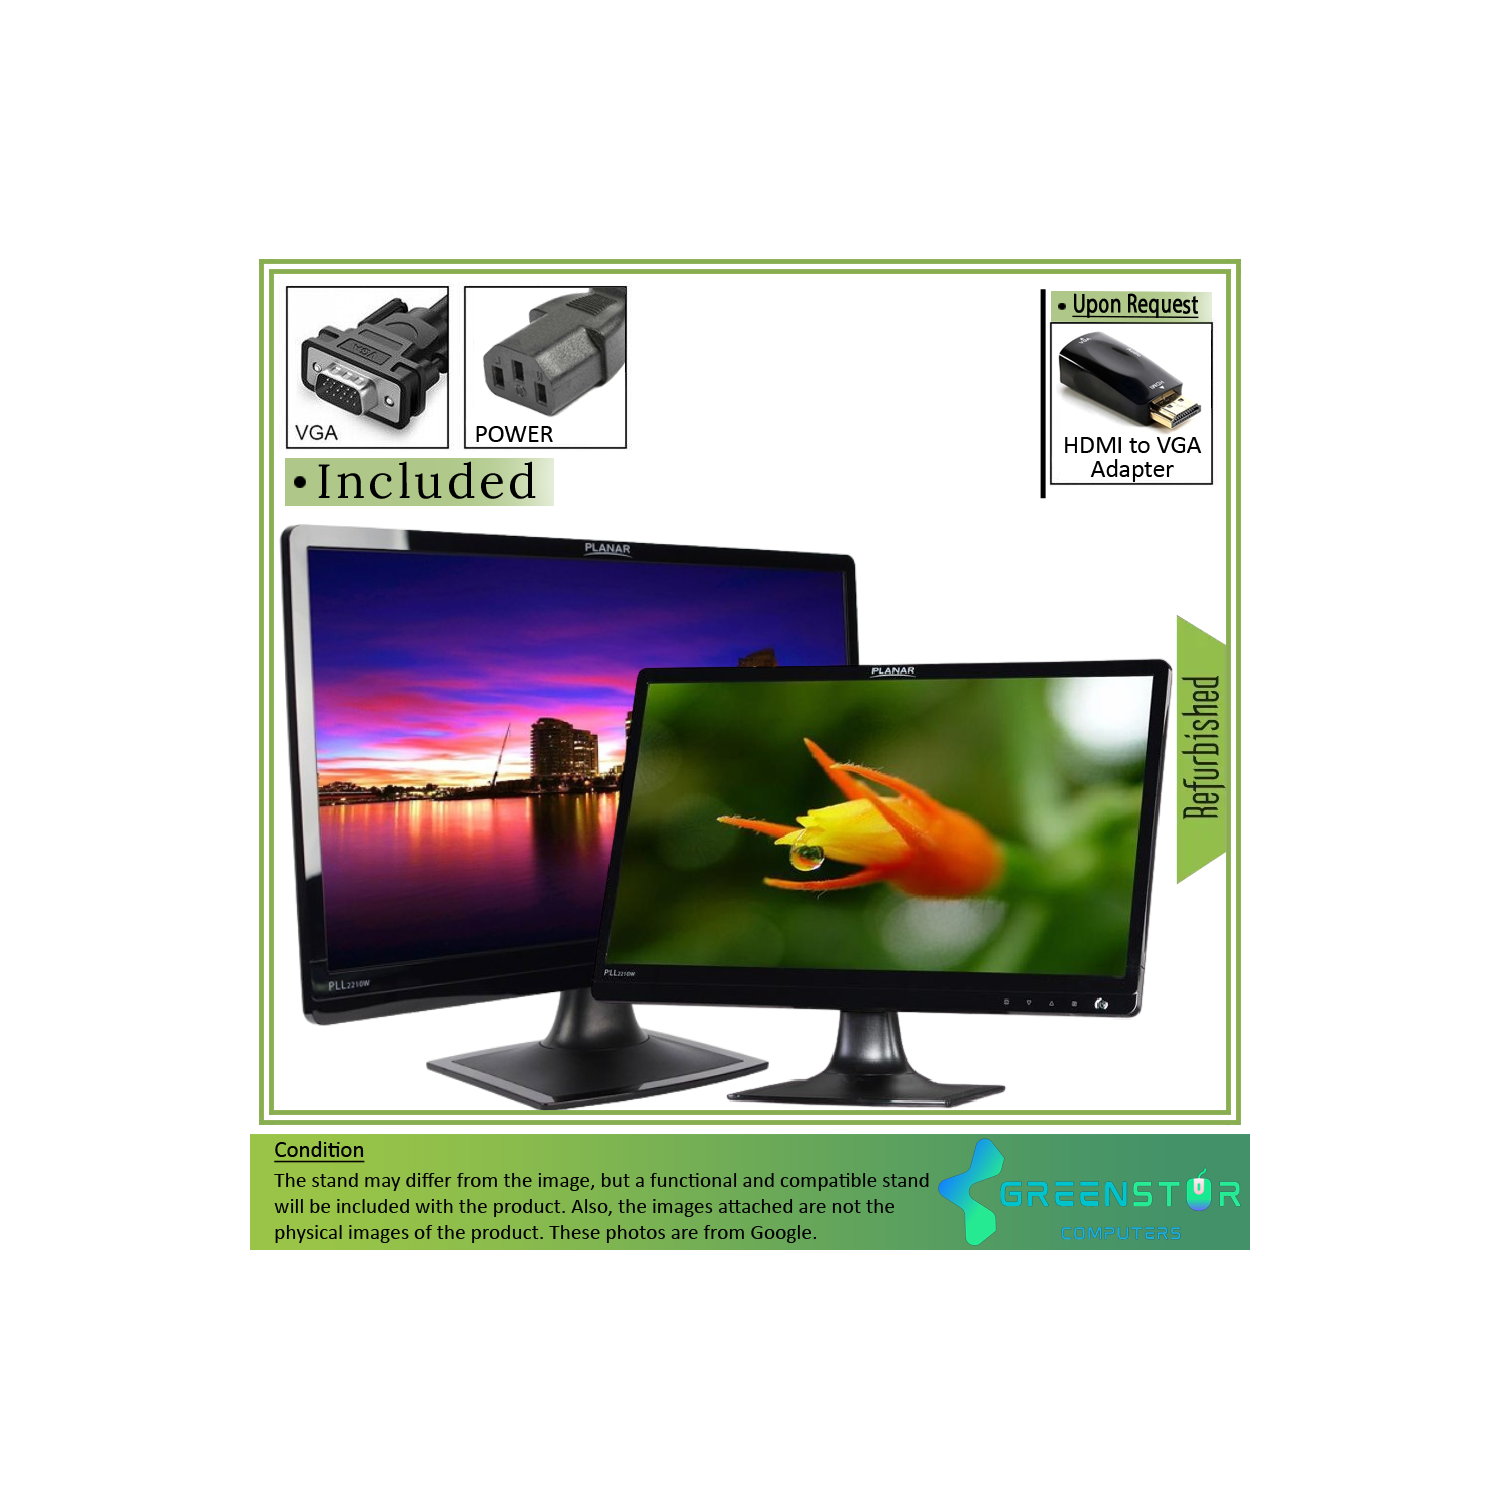 Refurbished(Good) - "Lot of Two" Planar Systems PLL2210W 21.5" 1920 x 1080 full HD LCD Monitor